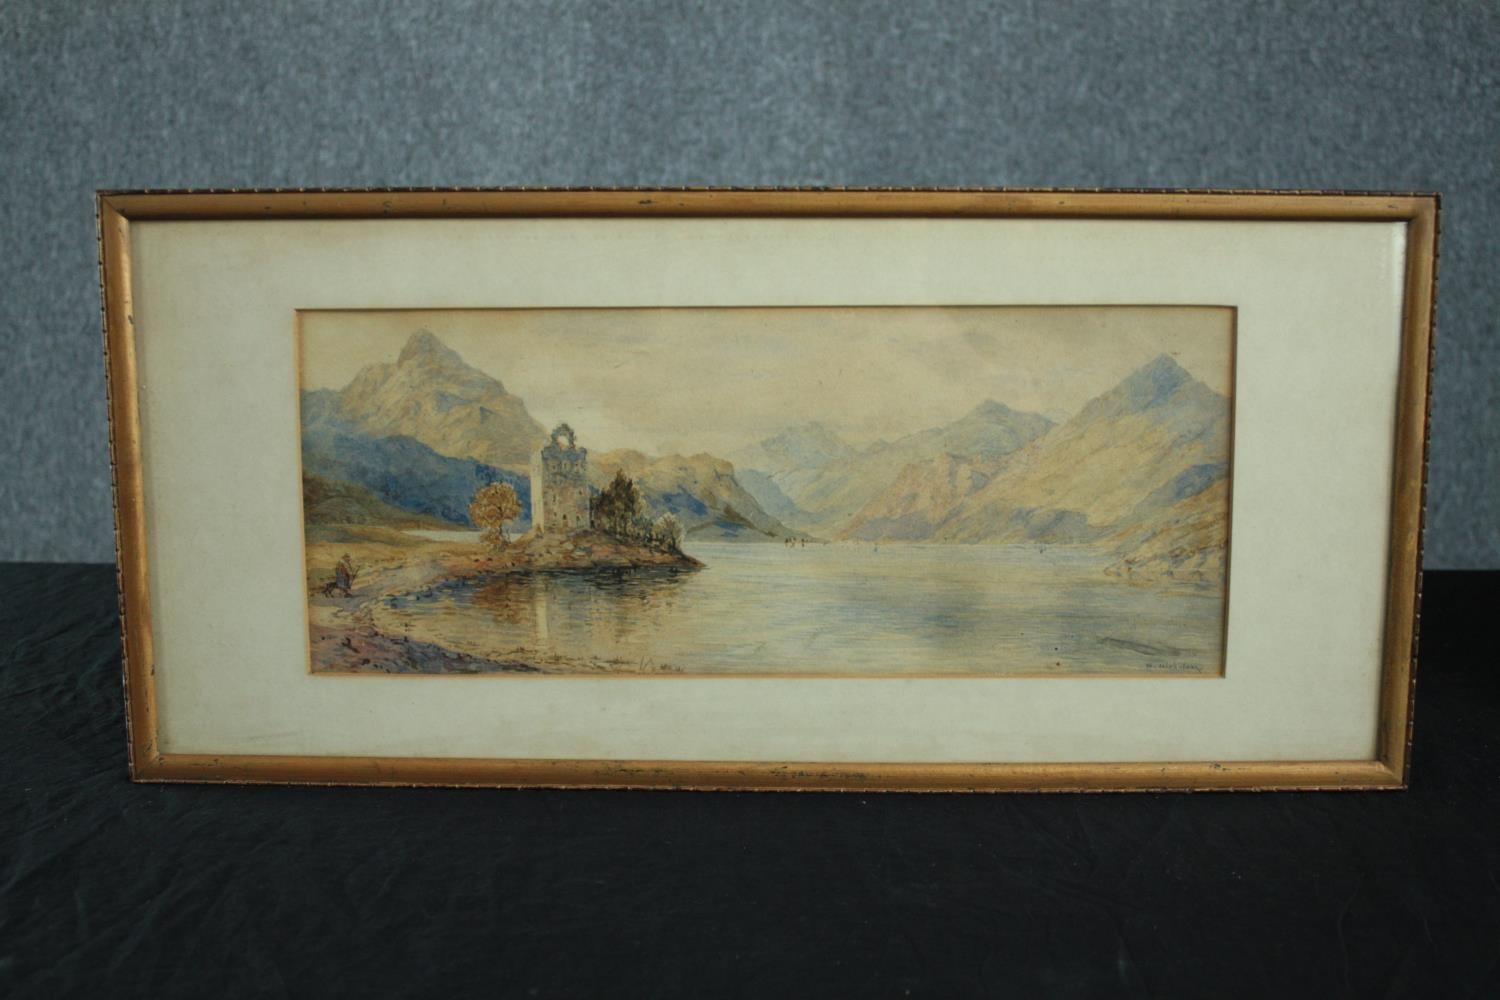 William Nicholson, RSA (1781-1844). Watercolour. Loch and ruins. Framed. H.26 W.55 cm. - Image 2 of 4